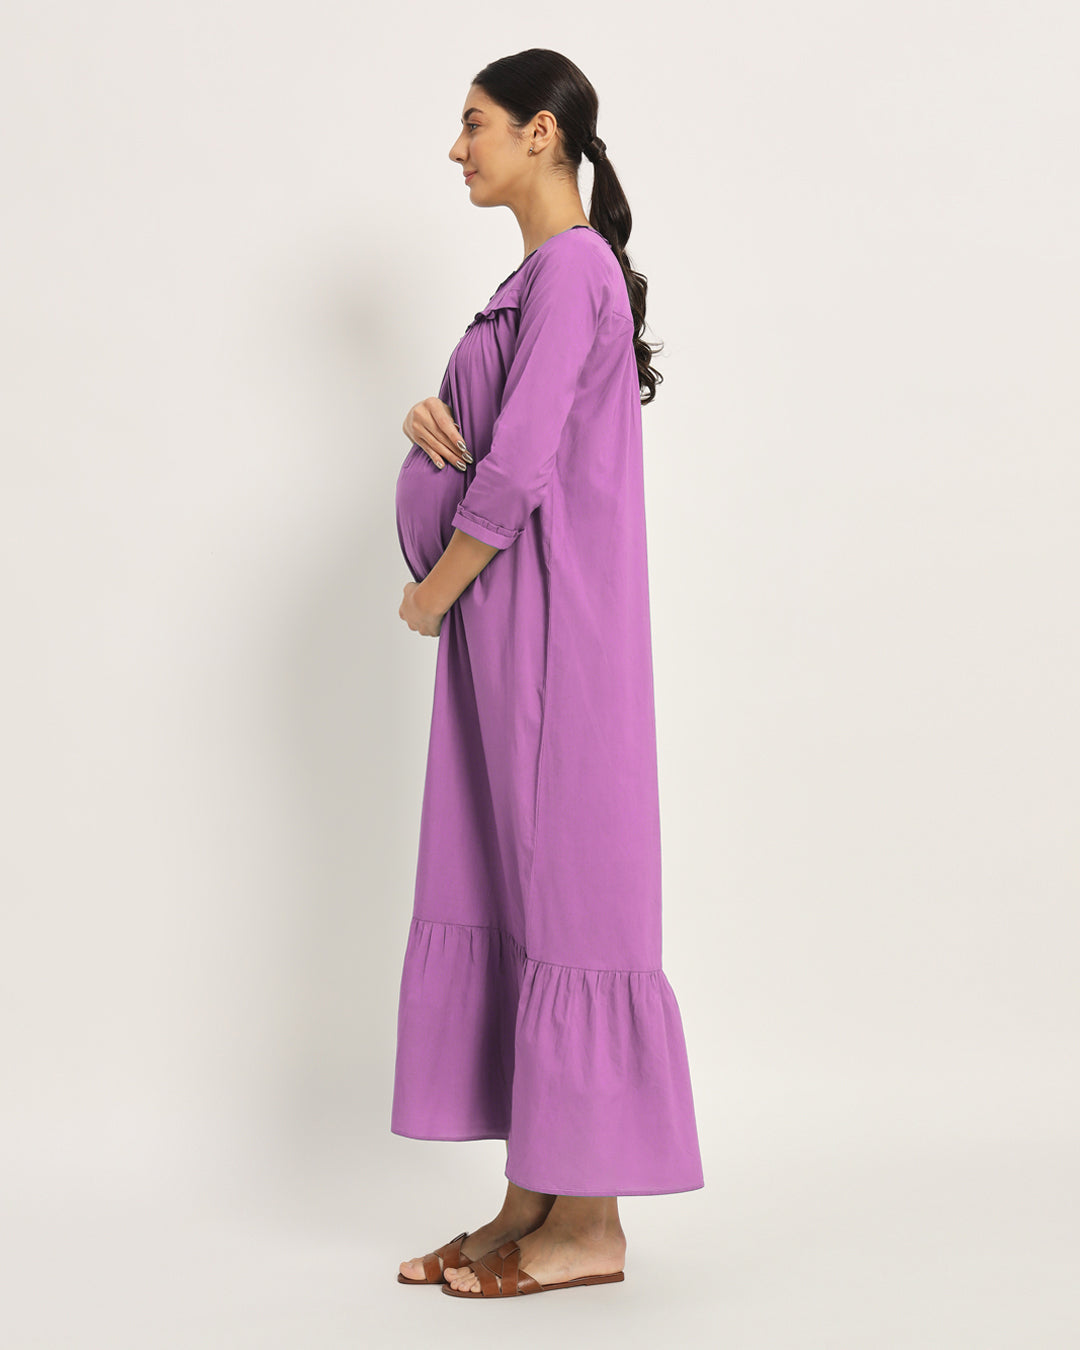 Combo: Sage Green & Wisteria Purple Bella Mama Maternity & Nursing Dress-Set of 2